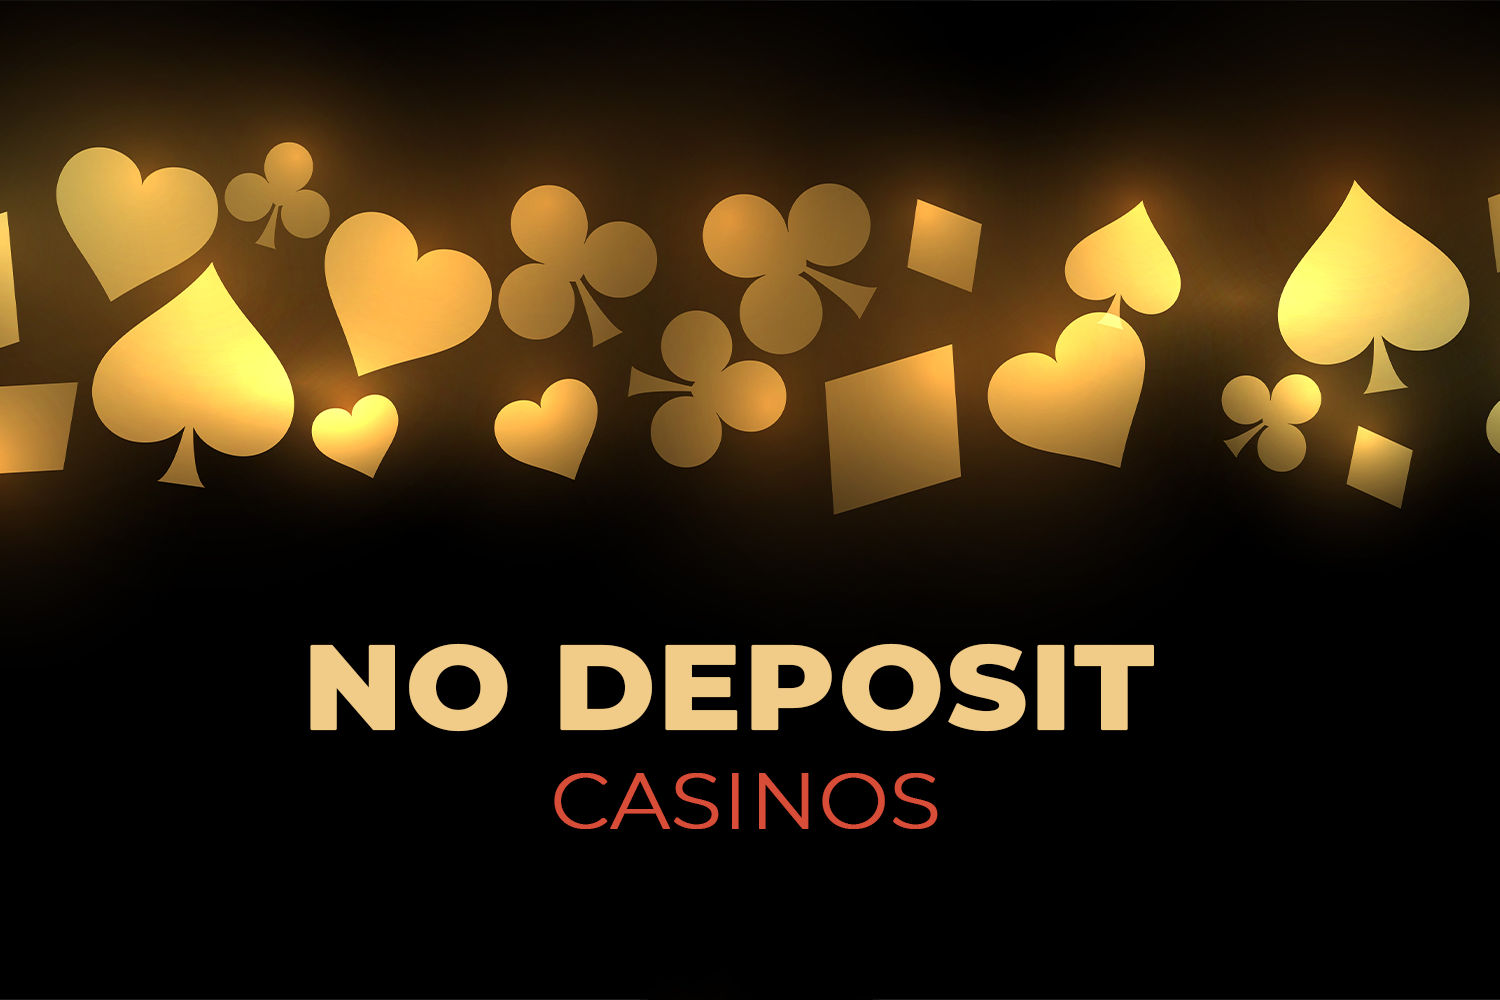 No deposit casinos ev rgt